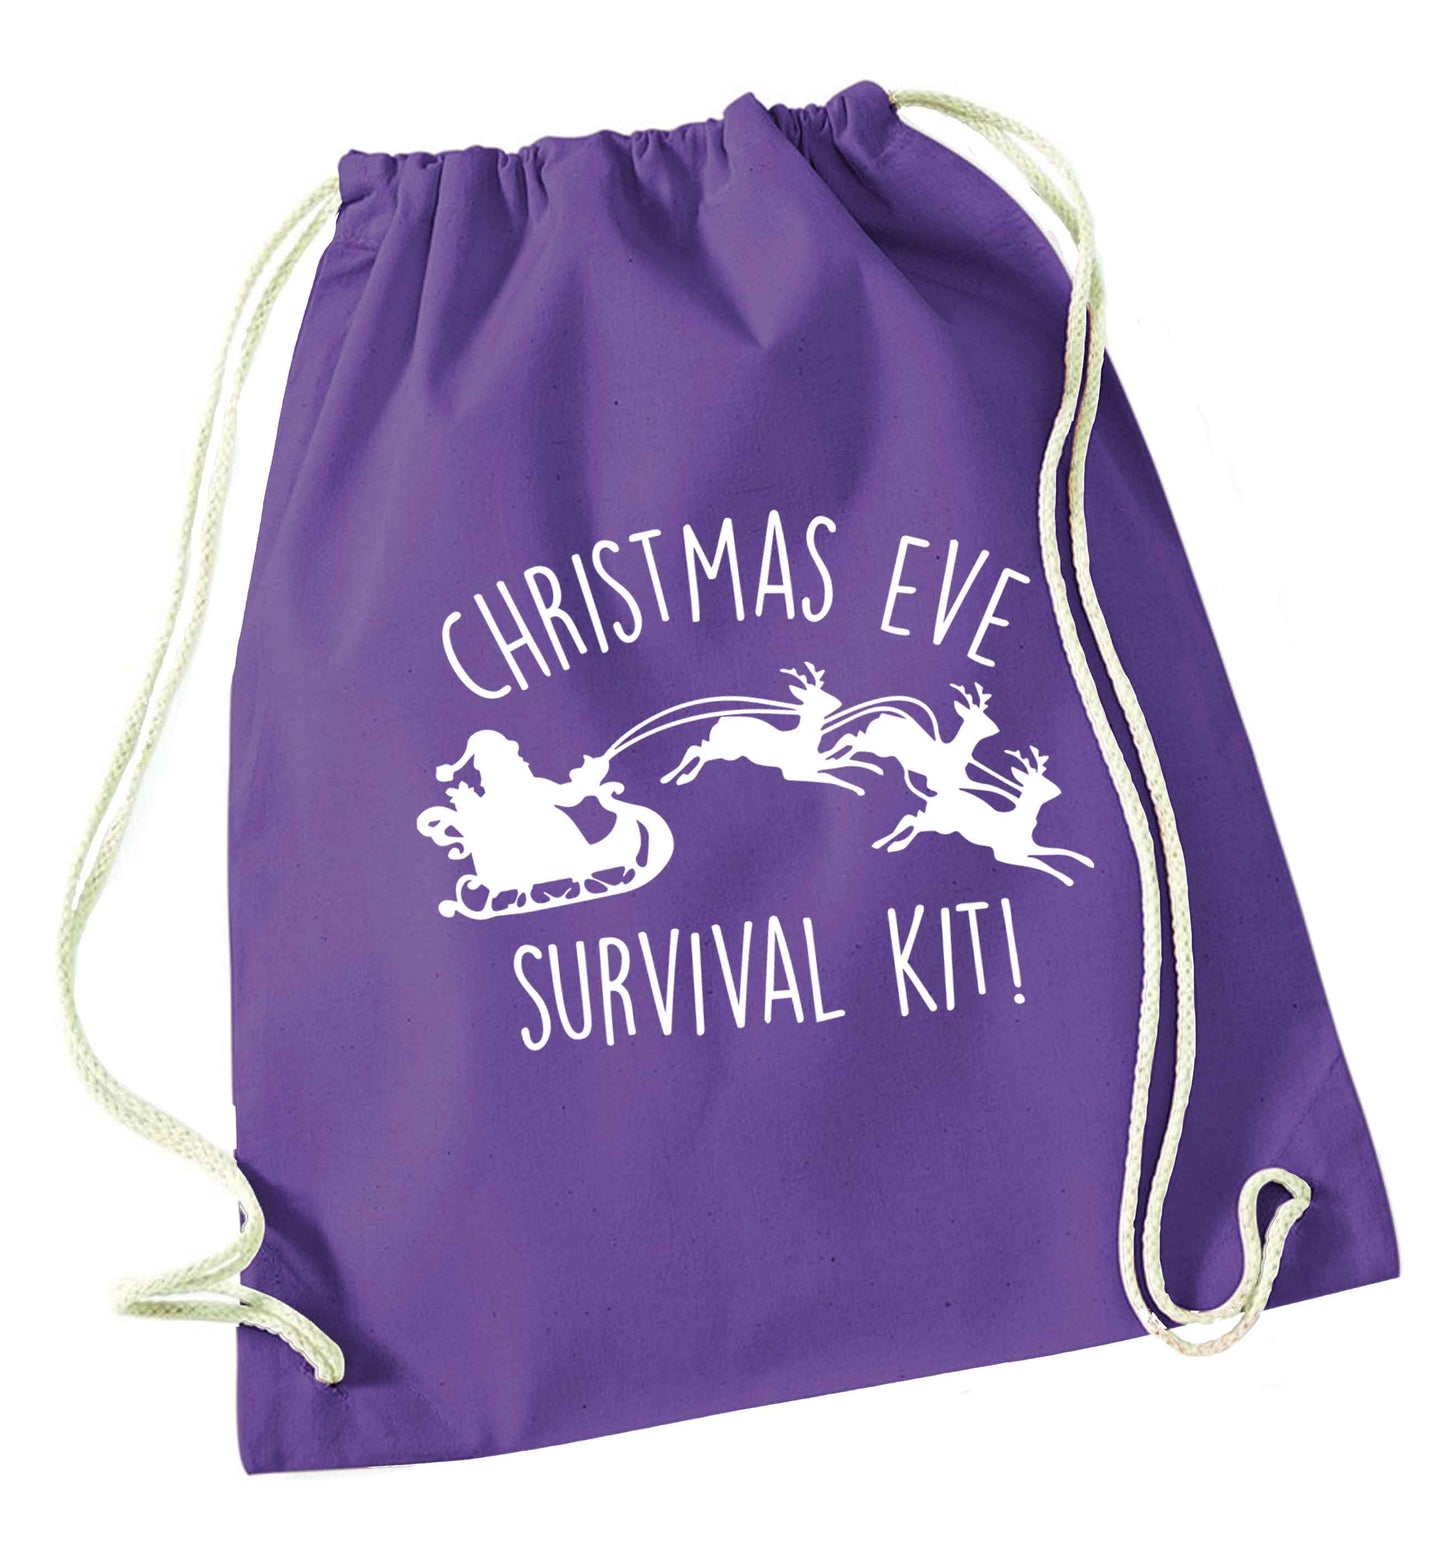 Christmas Day Survival Kitpurple drawstring bag